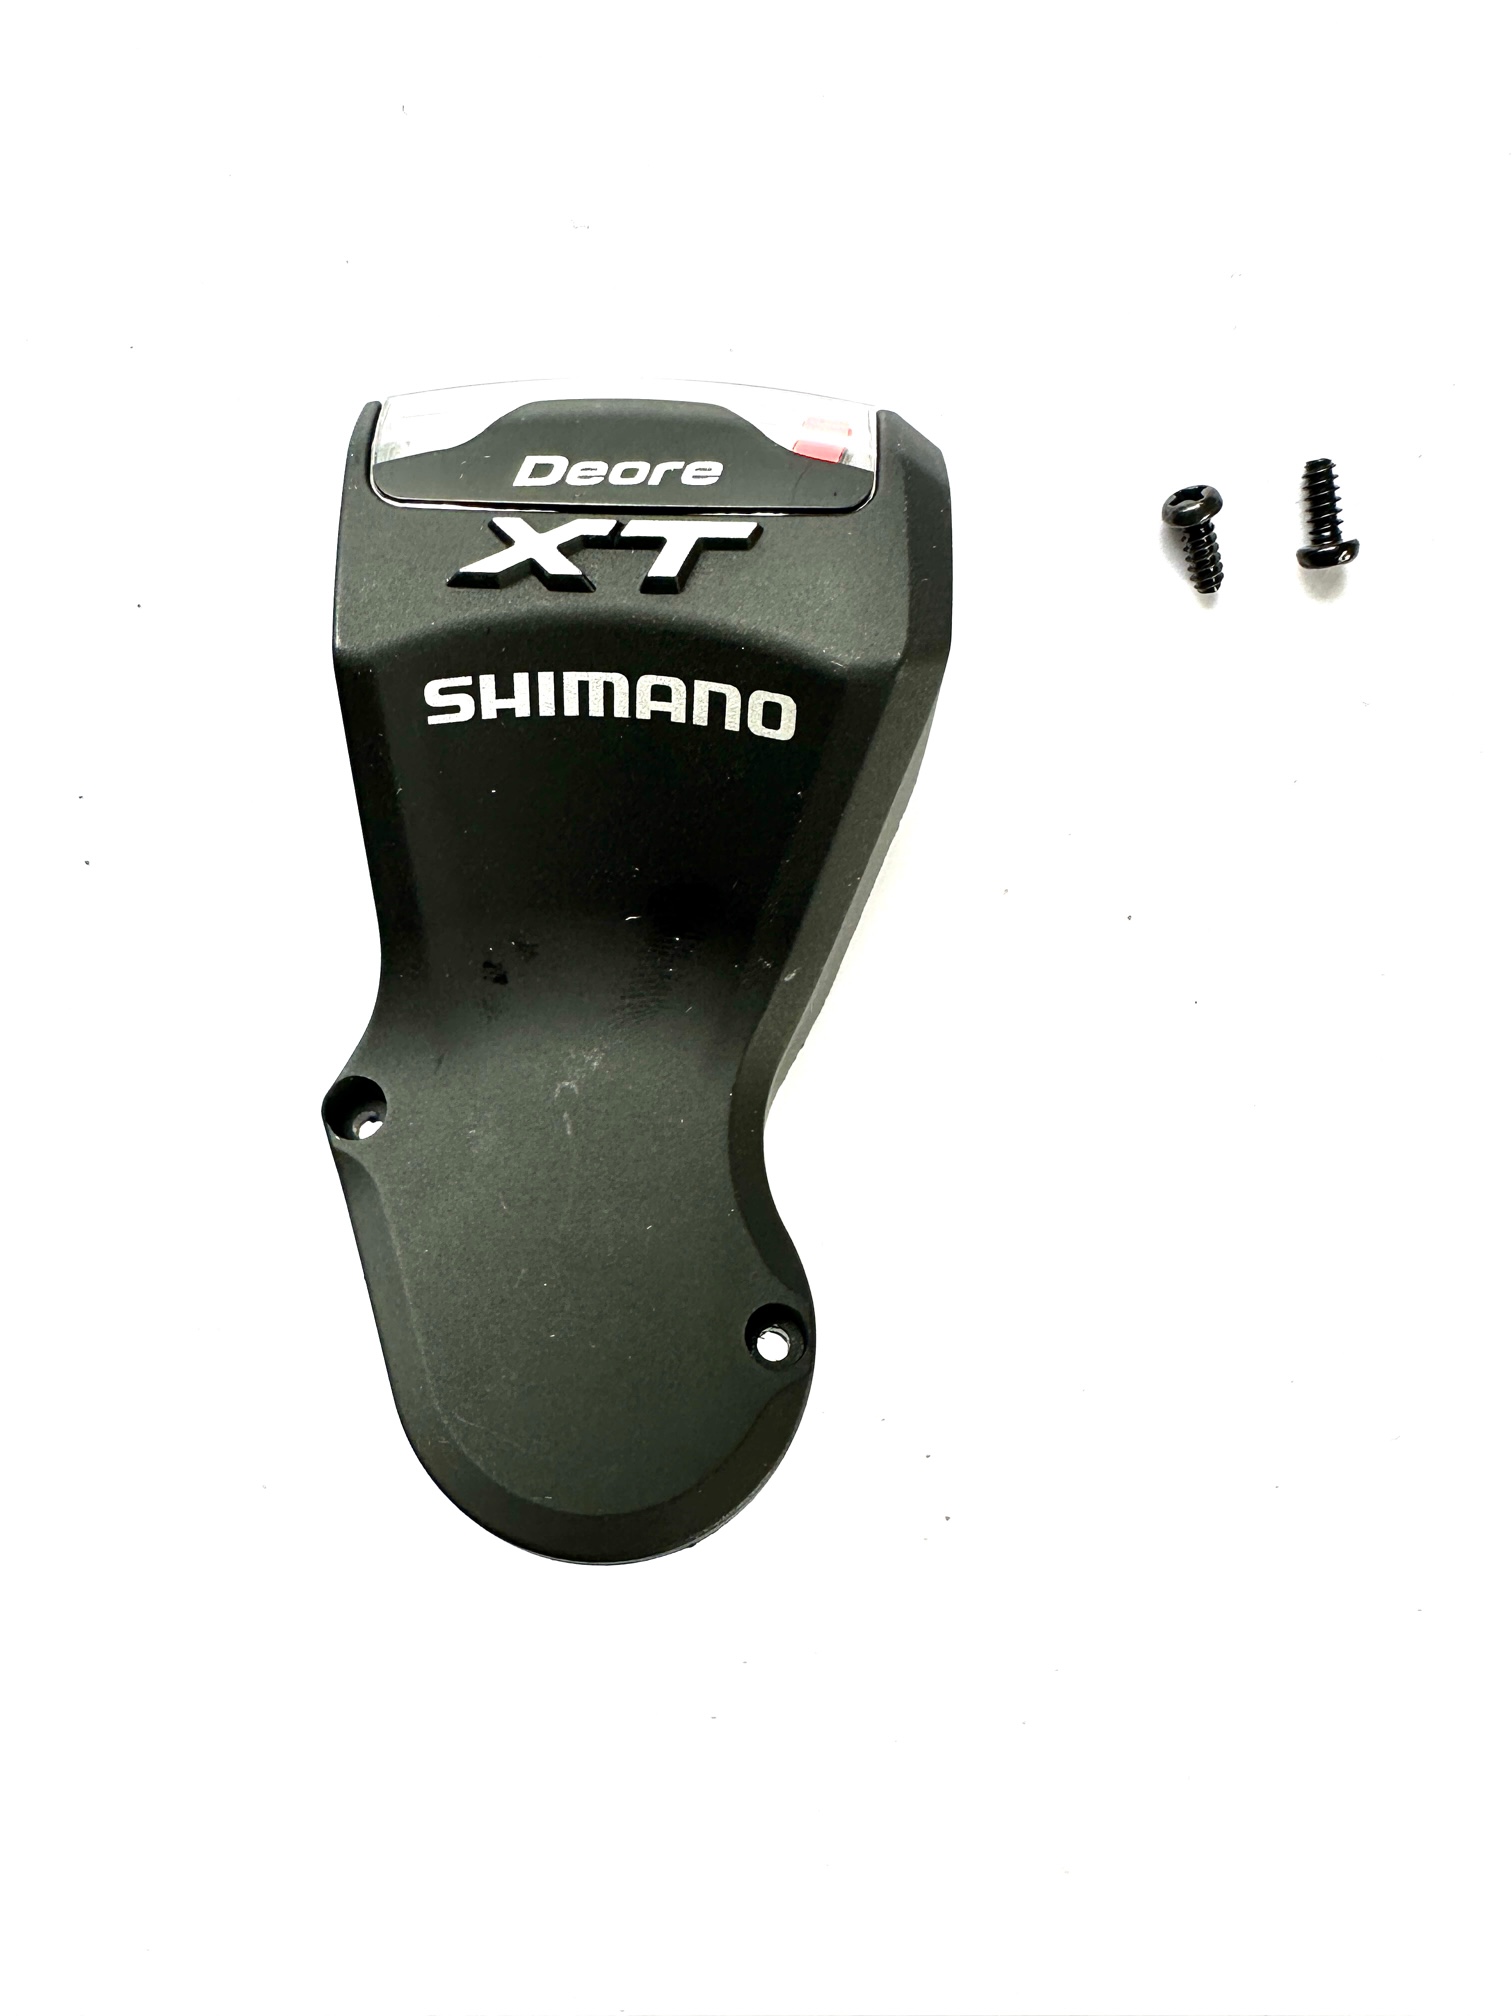 SHIMANO Deore XT gear indicator left SL-M770